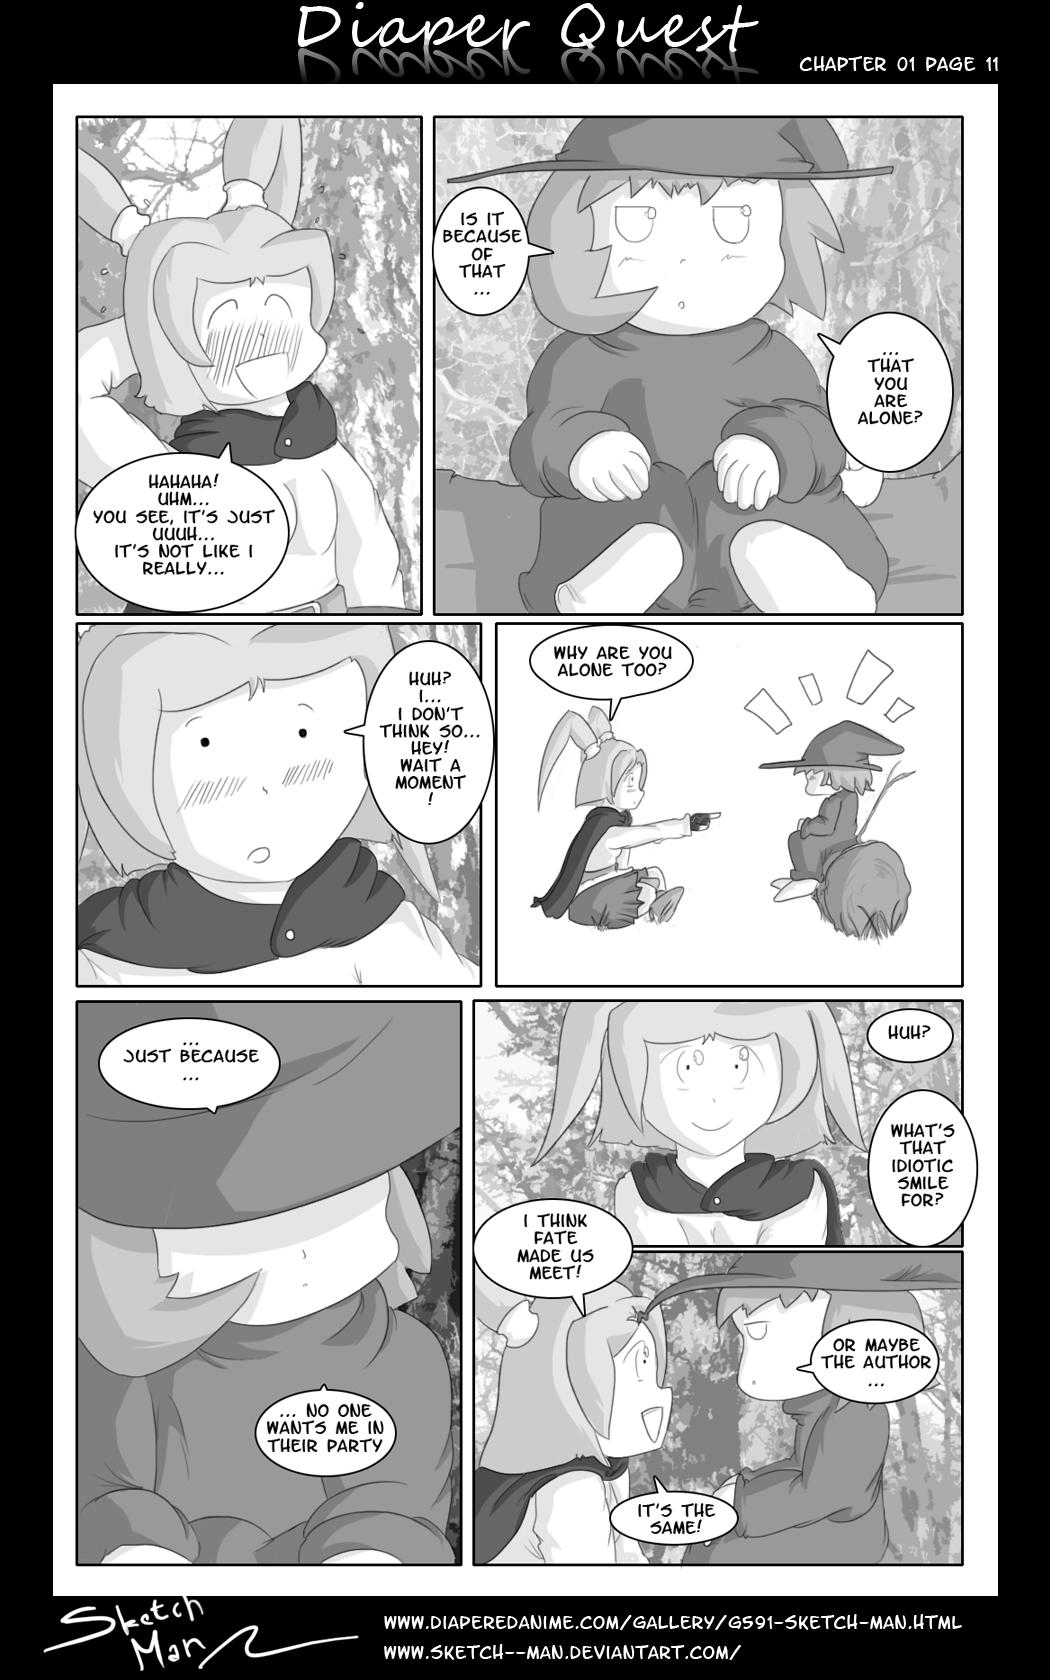 Money Sketch Man's Diaper Quest Complete Flagra - Page 11